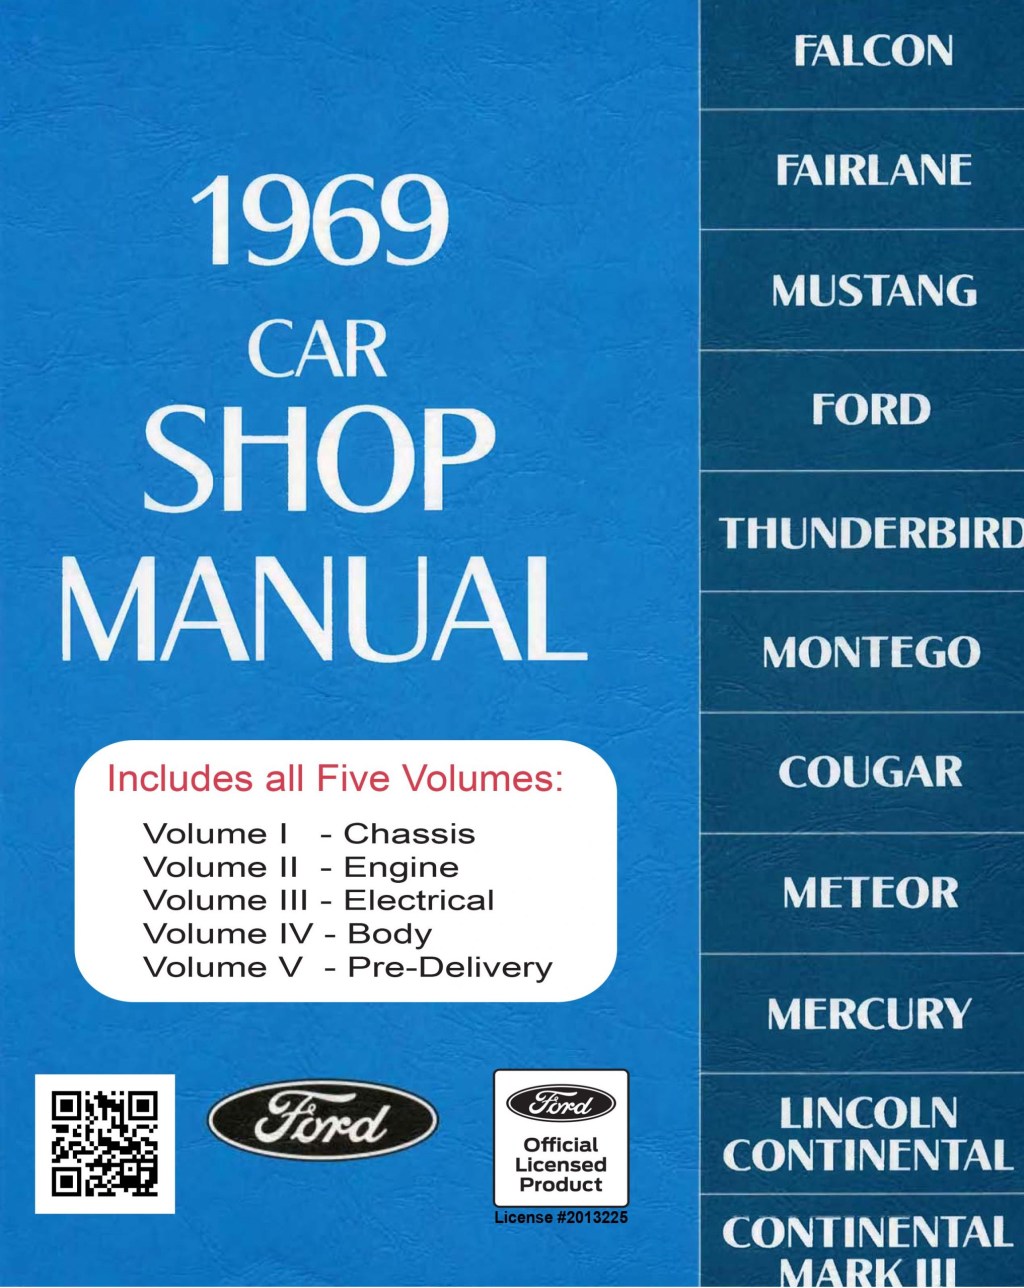 Picture of: Ford Car Shop Manual Vol I-V